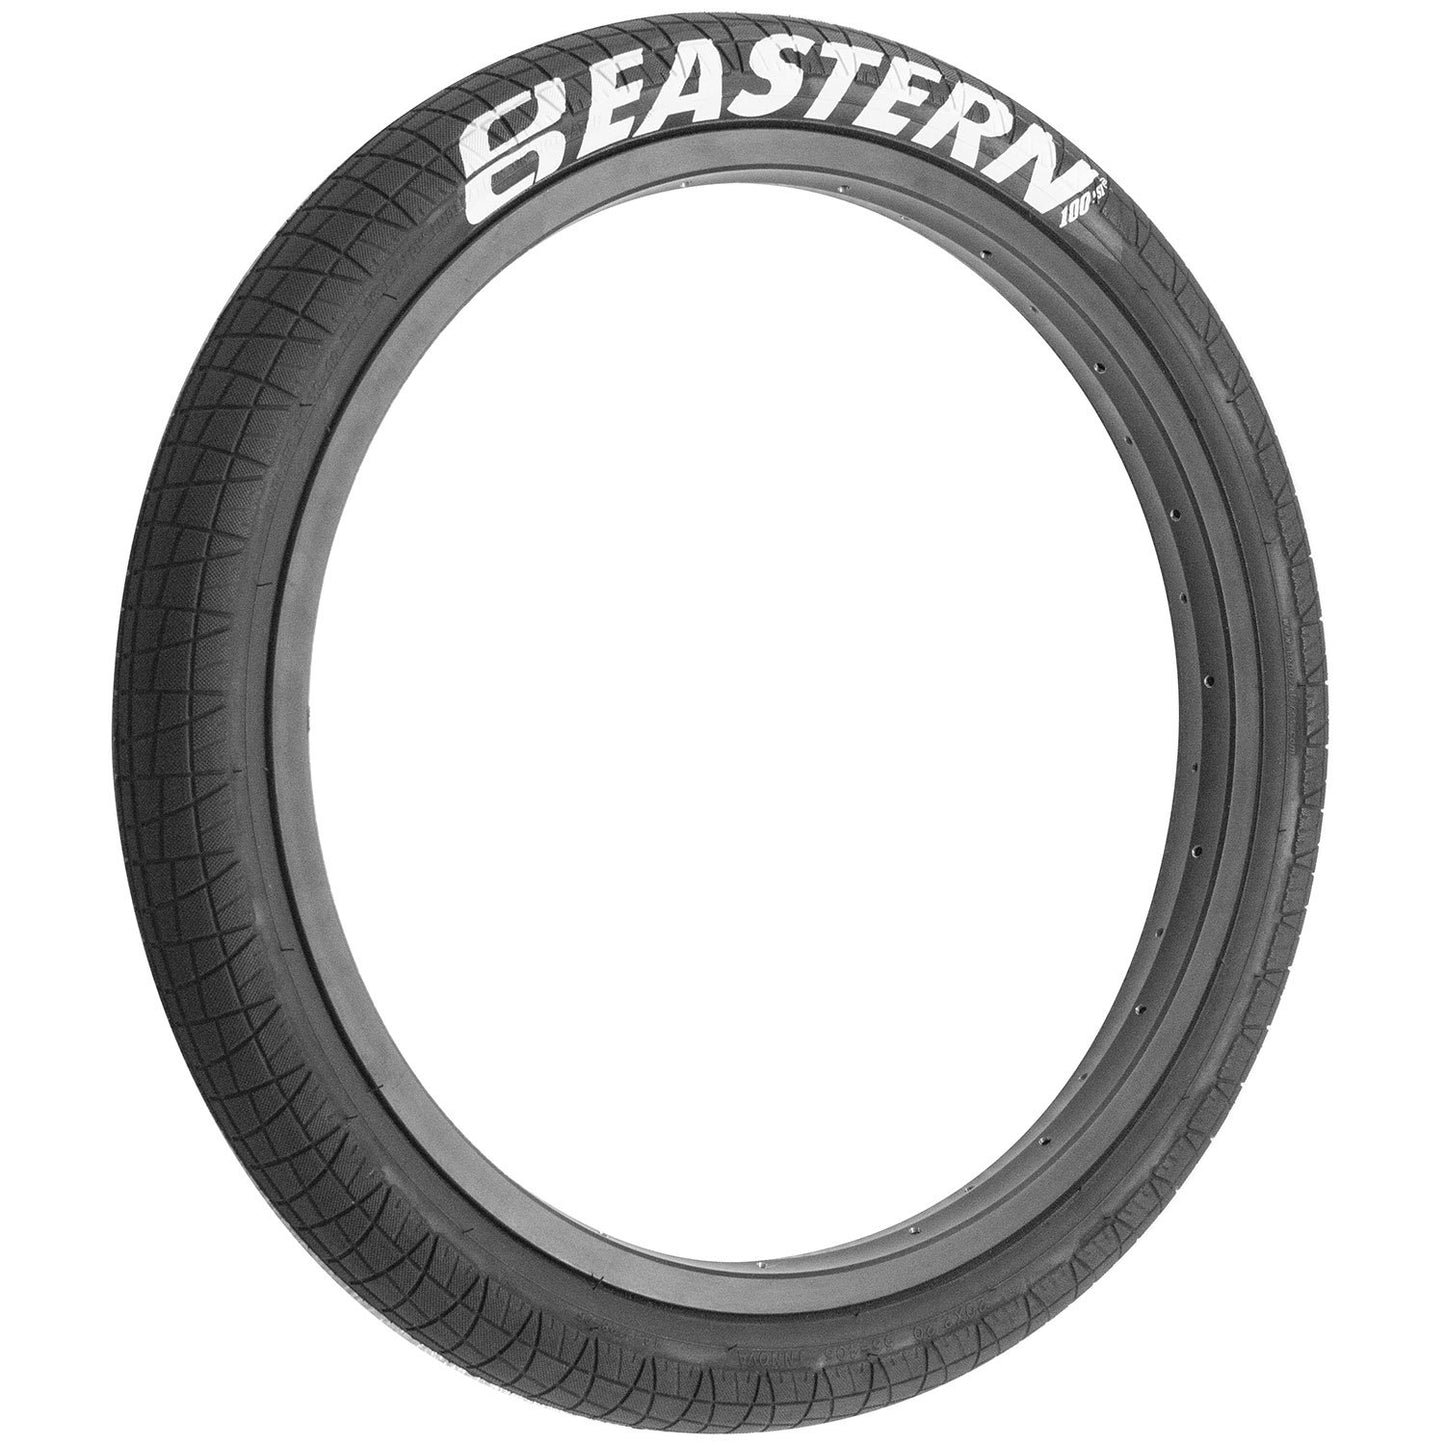 eastern bikes 20 inch x 2.2 throttle tires 100psi black white 1